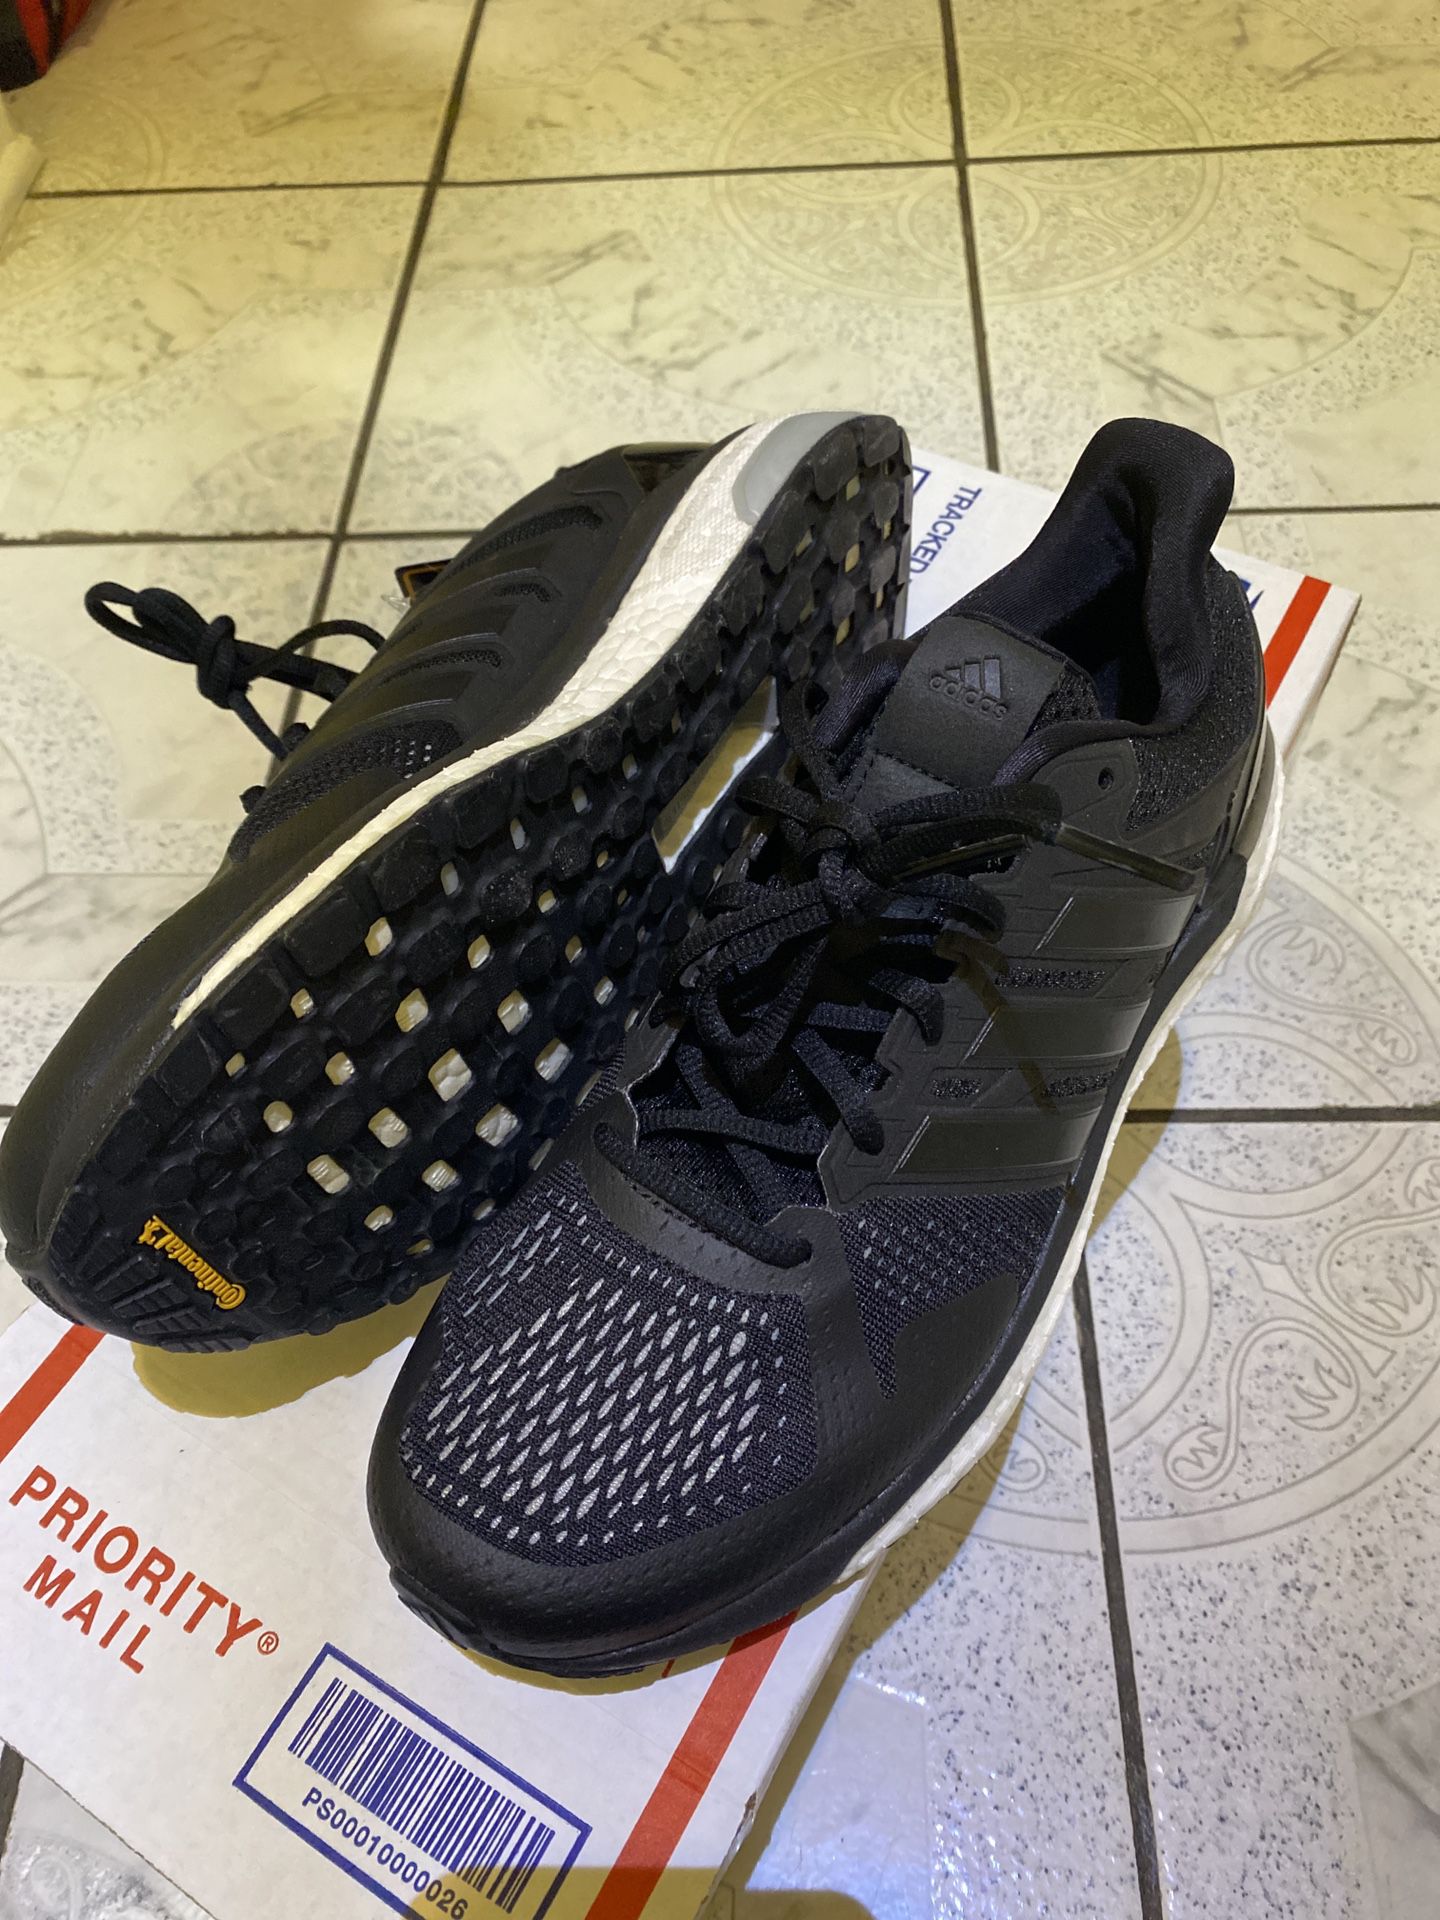 New Adidas BOOST Ultra Performance Supernova ST Run Shoes Black CG4036 Women 8.5